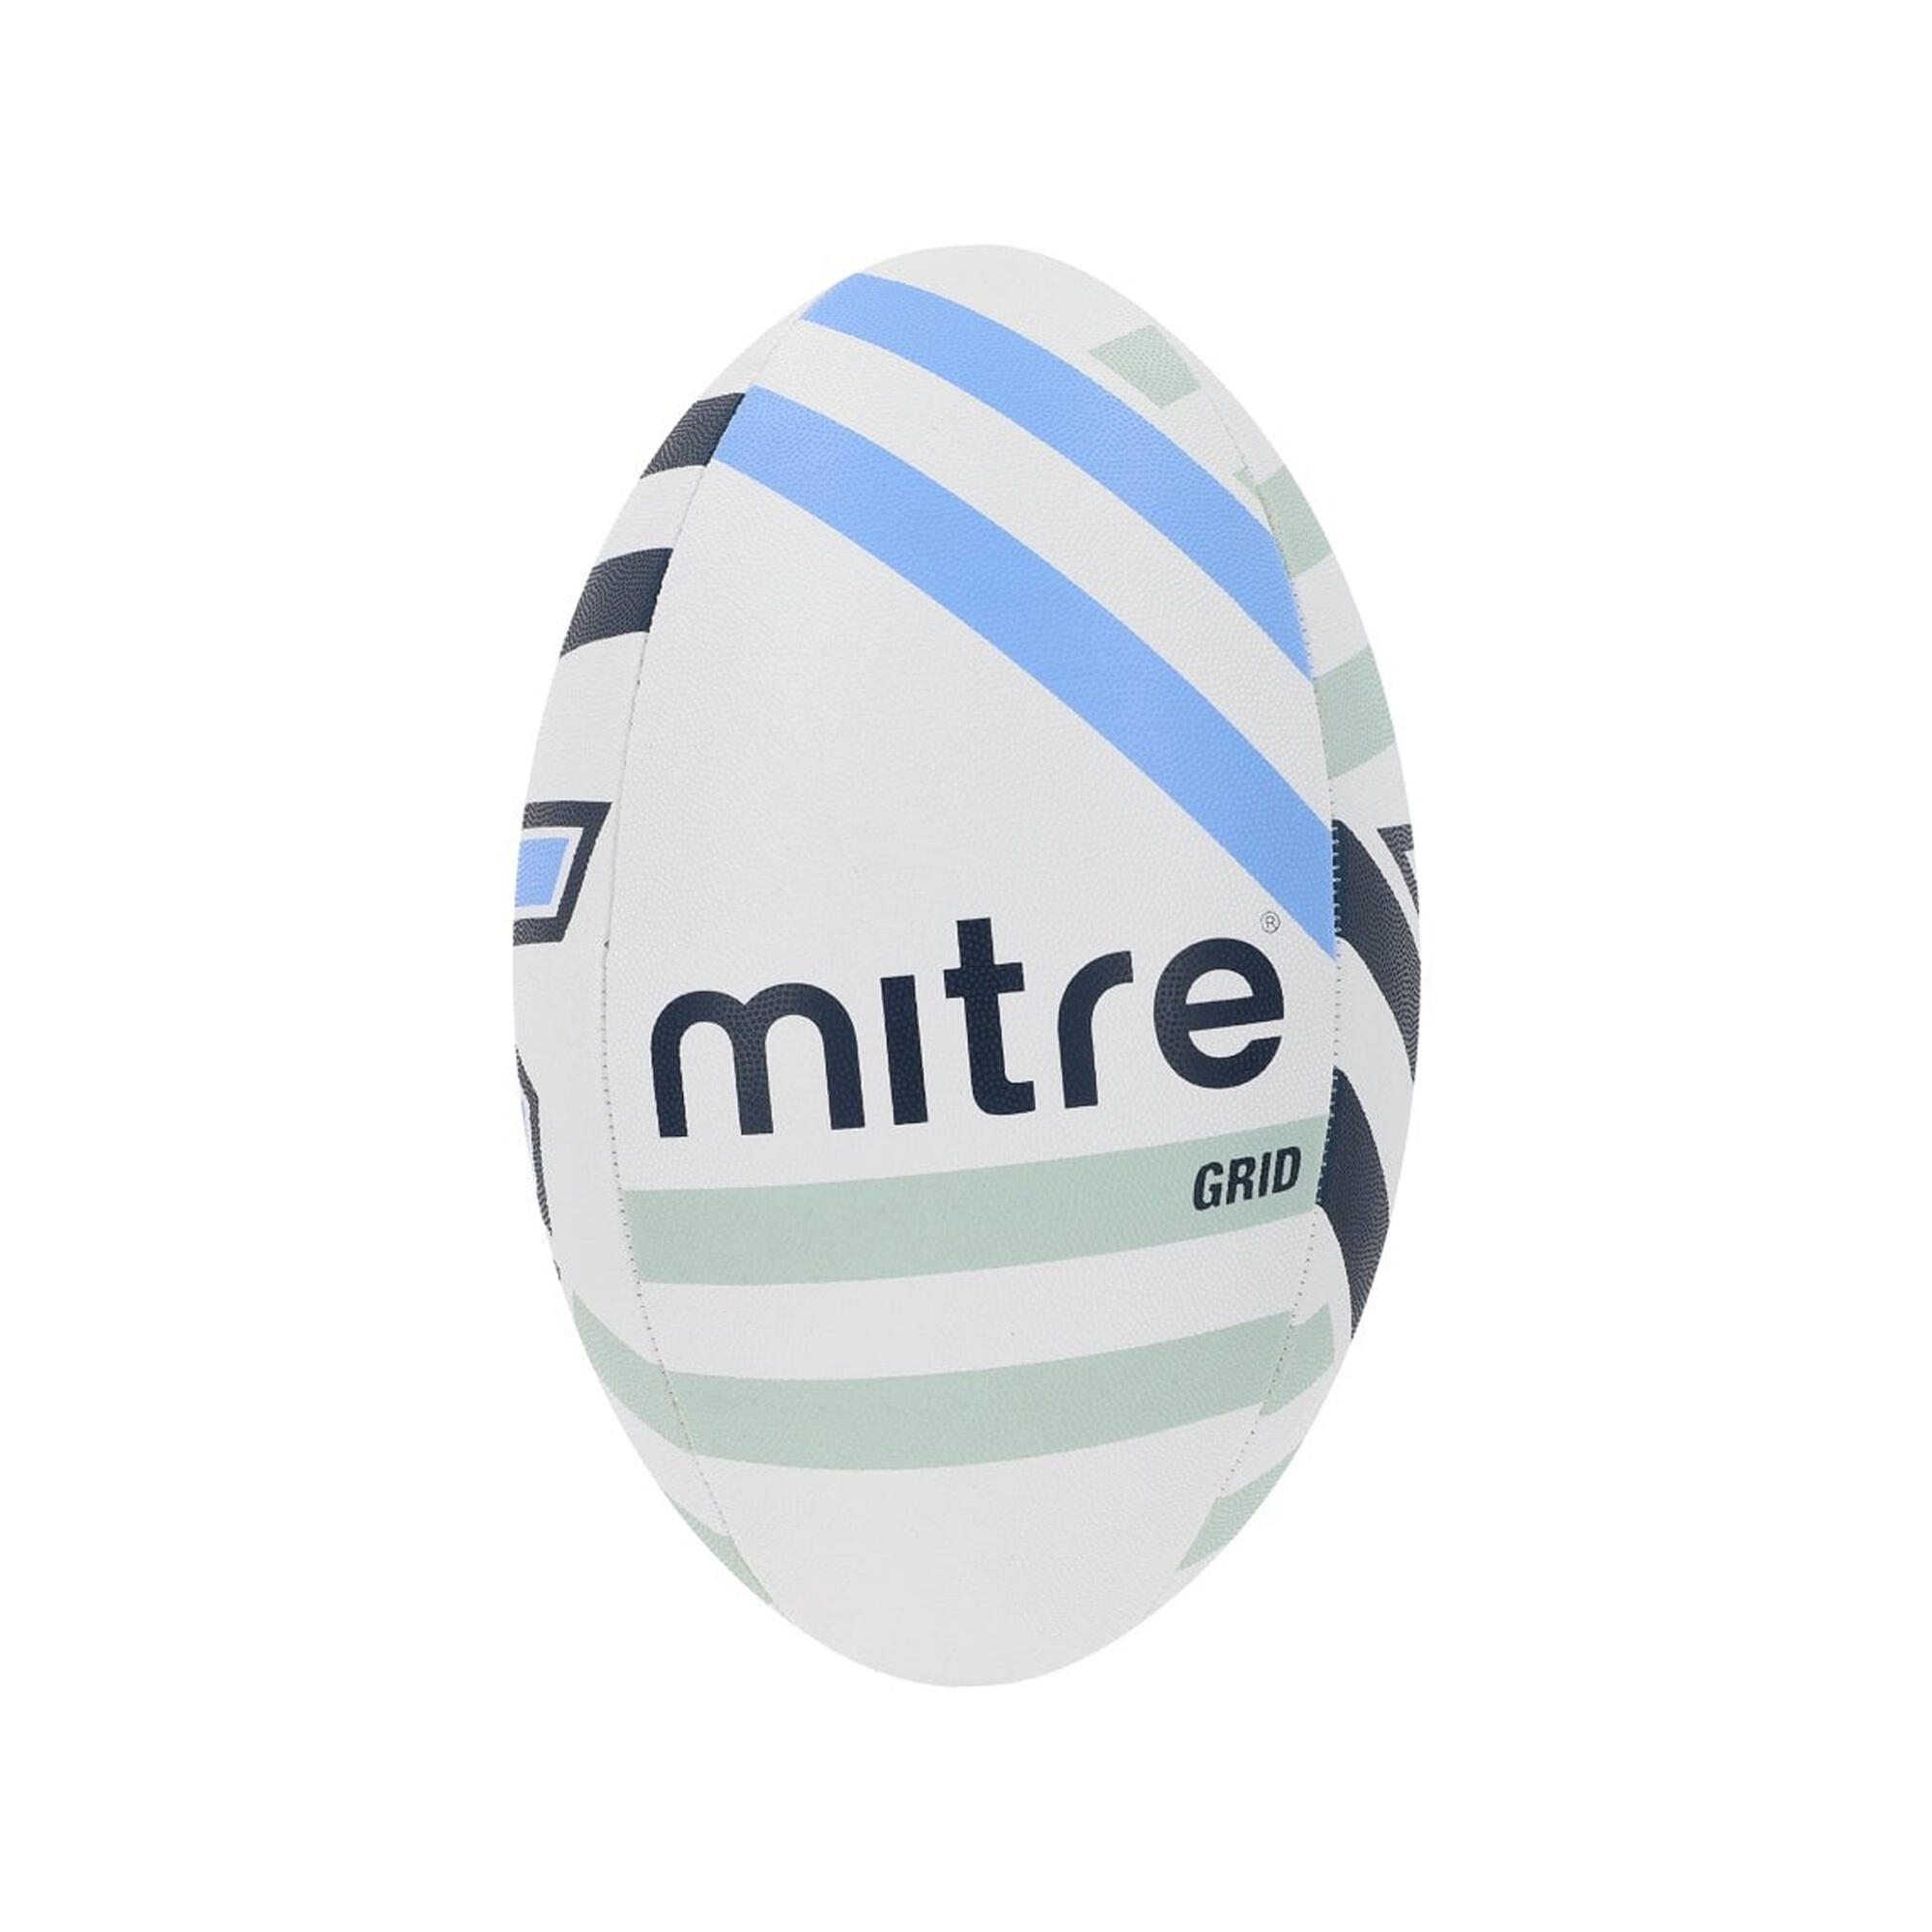 Grid Rugby Ball (White/Black/Blue) 1/4